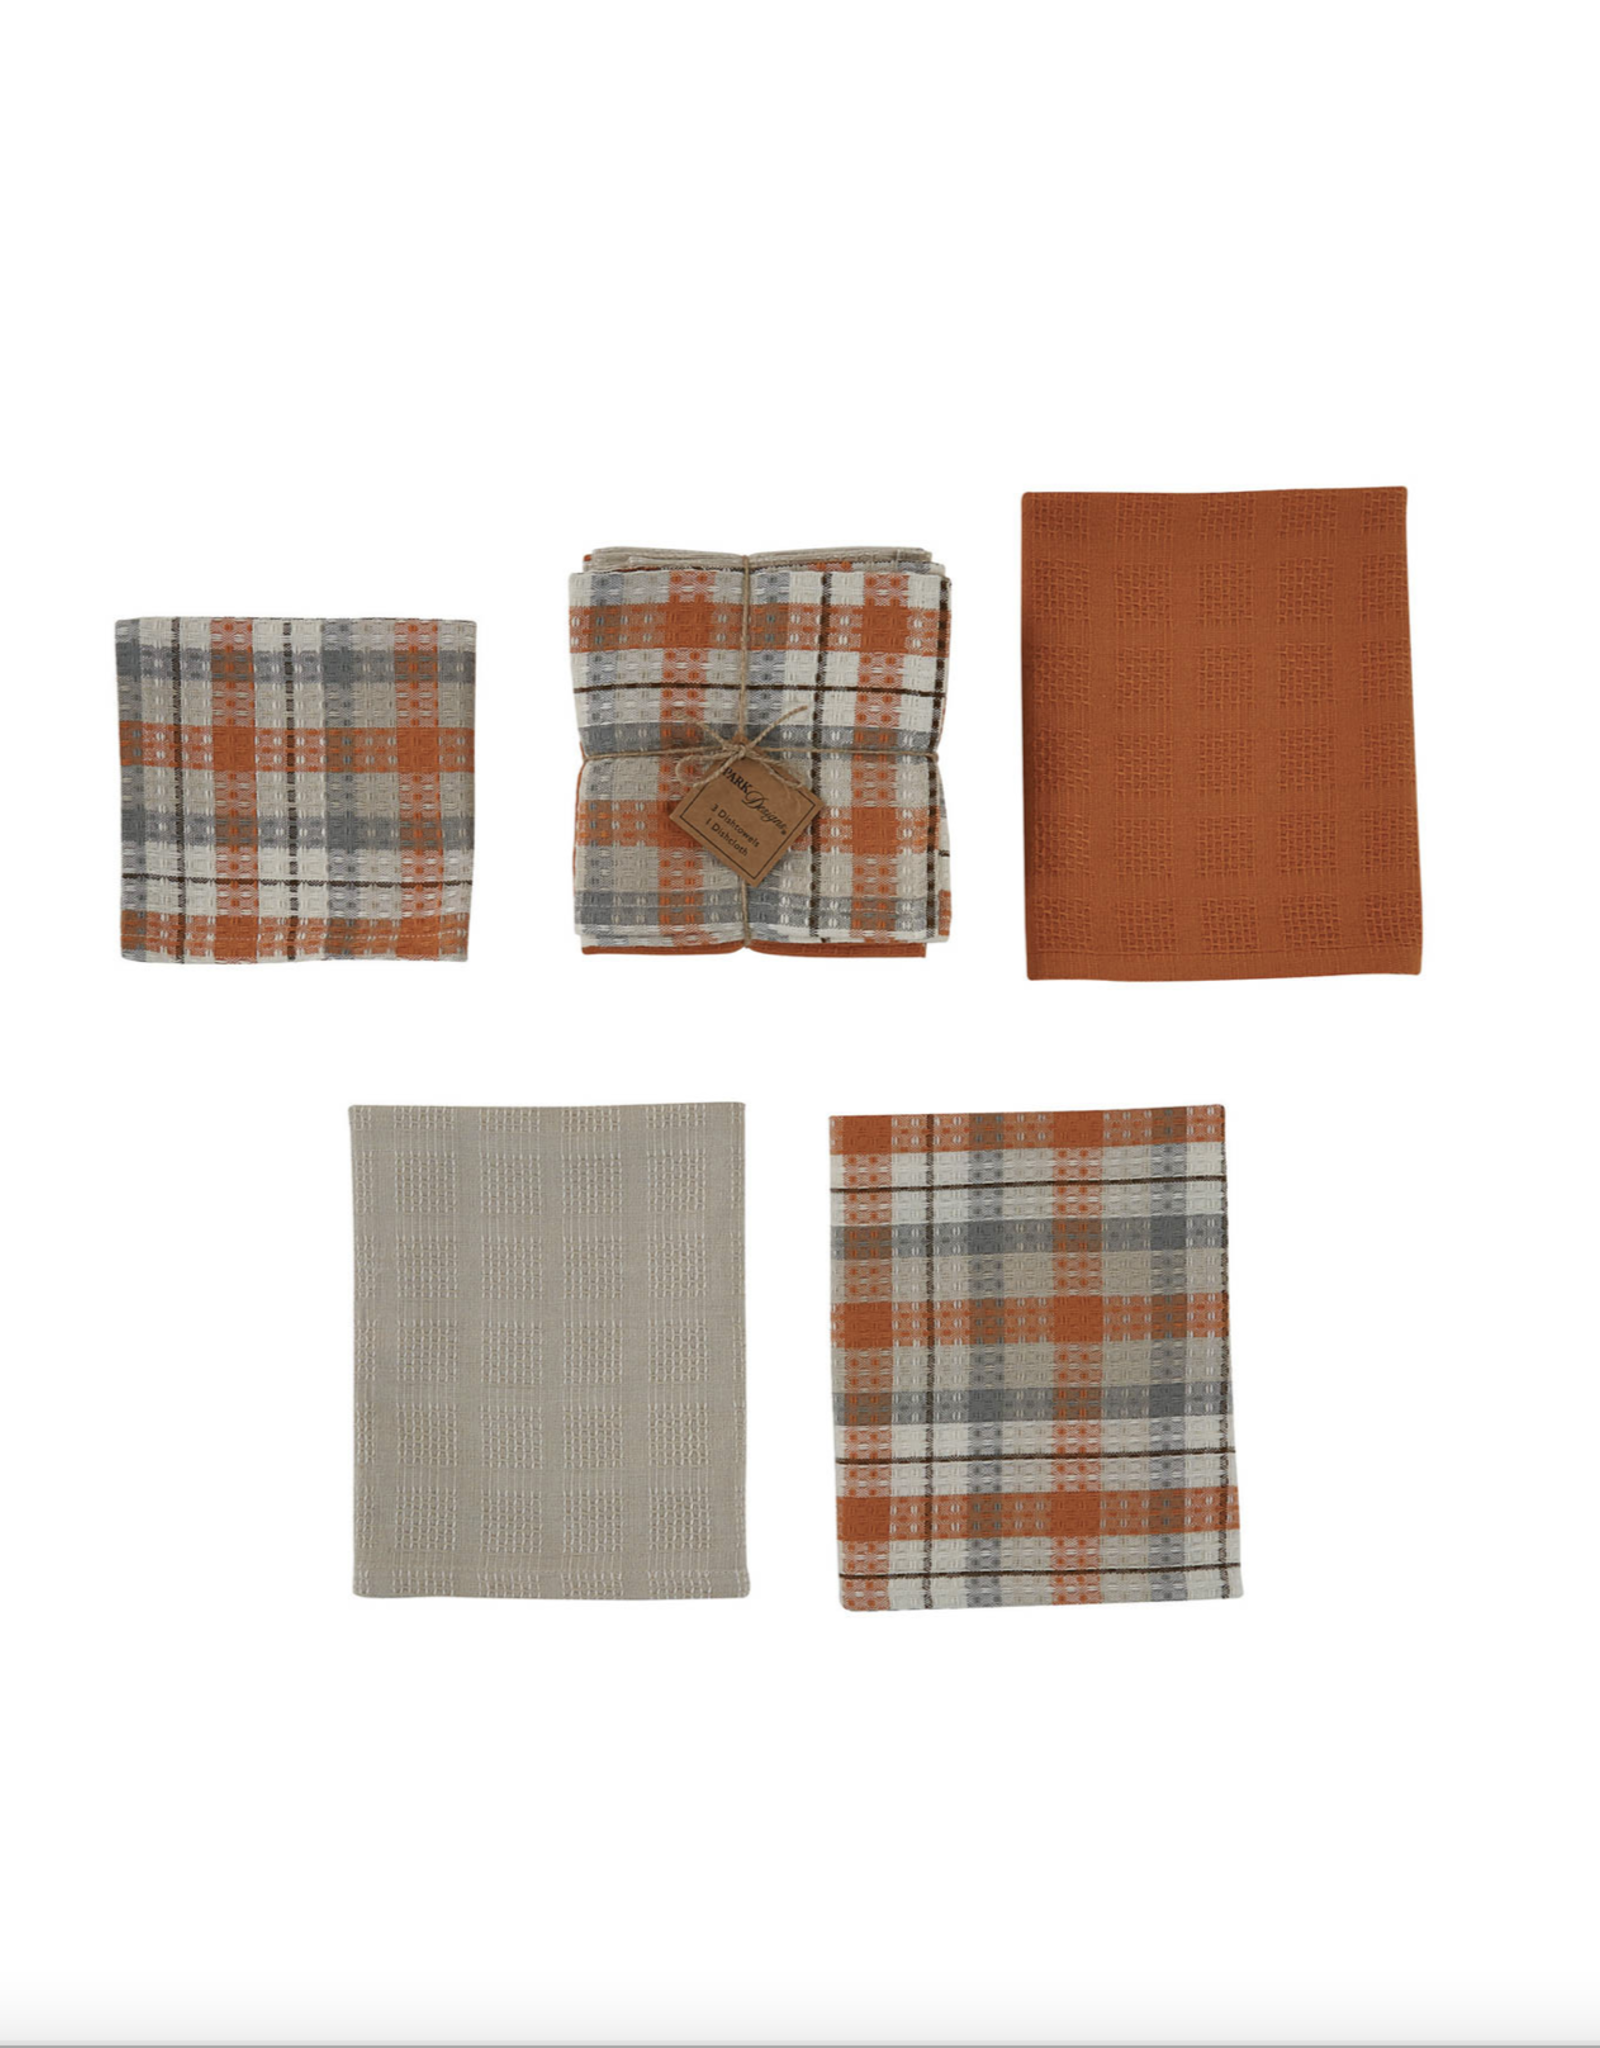 Park Designs 3 Dishtowels/1 Dishcloth Set - Apricot & Stone